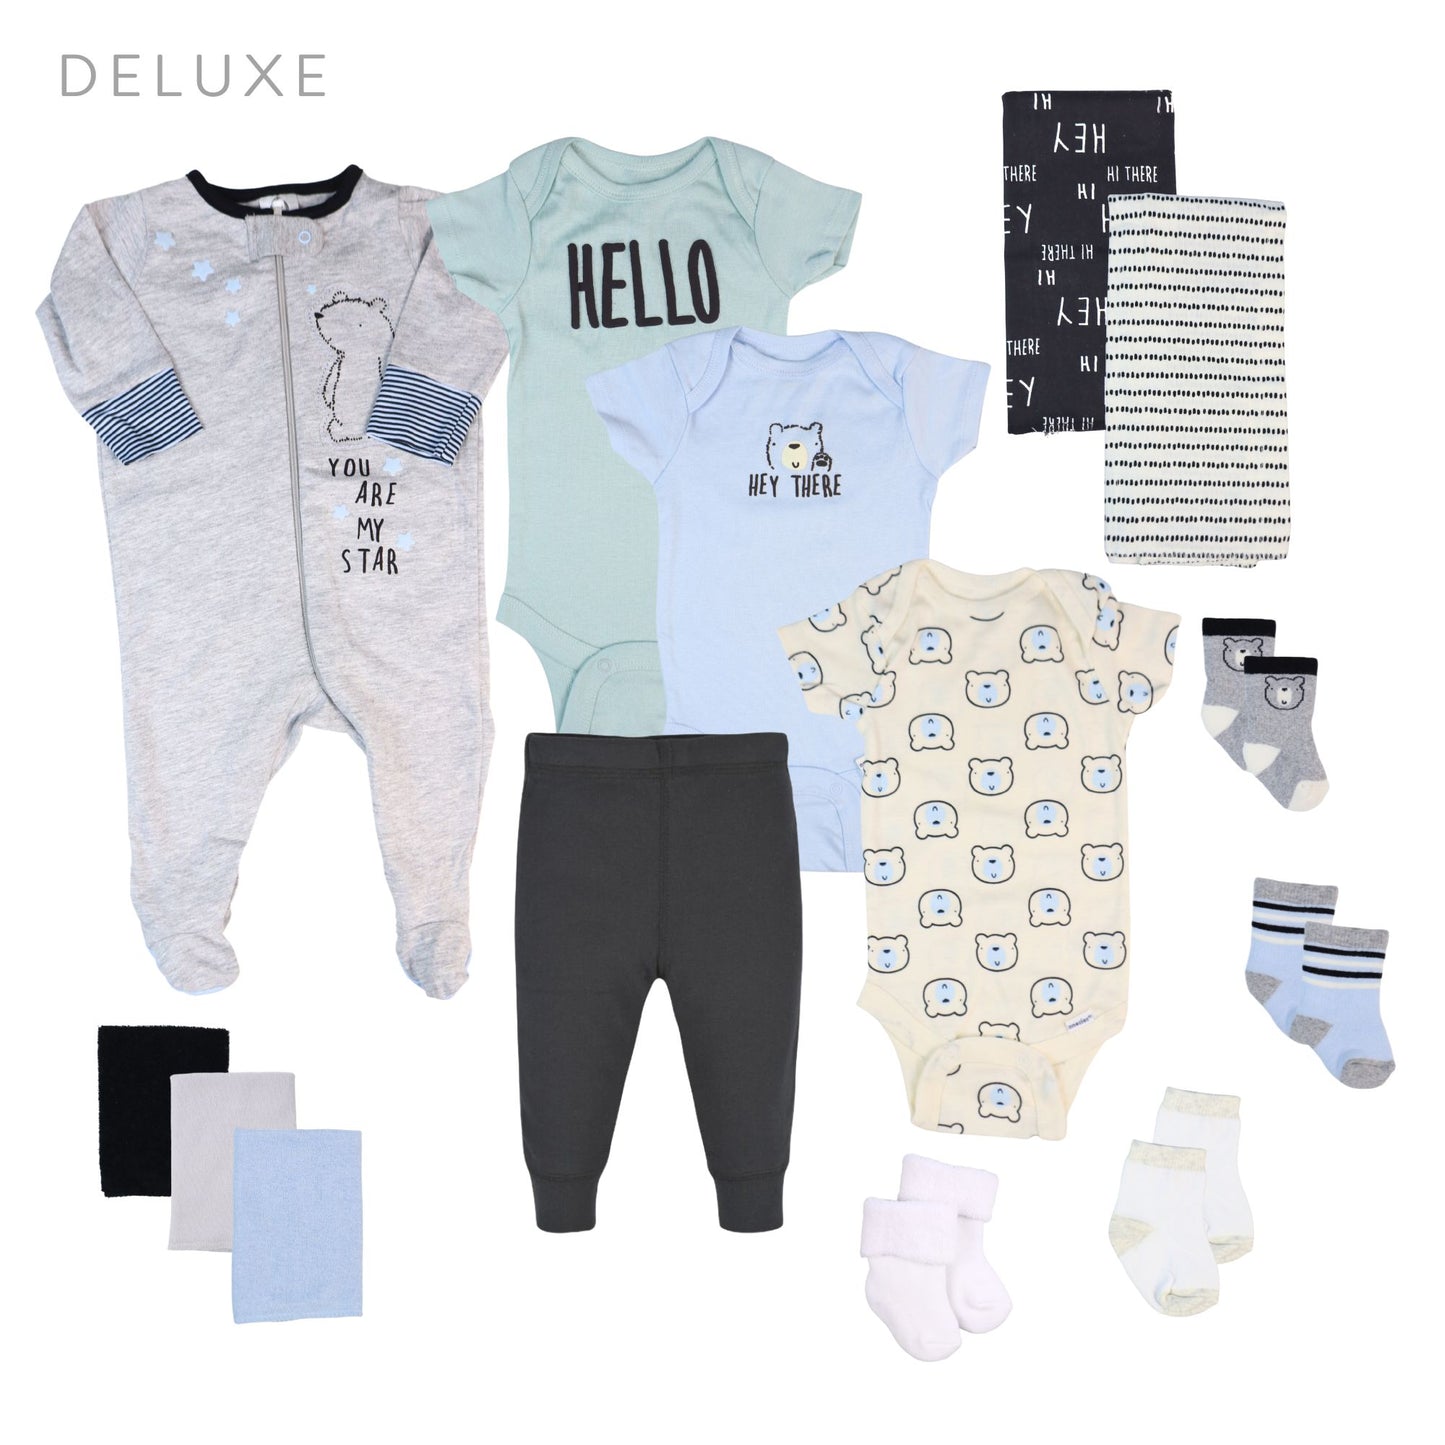 baby boy gift box clothing set including bear sleeper onesies pants  burp cloths washcloths and socks